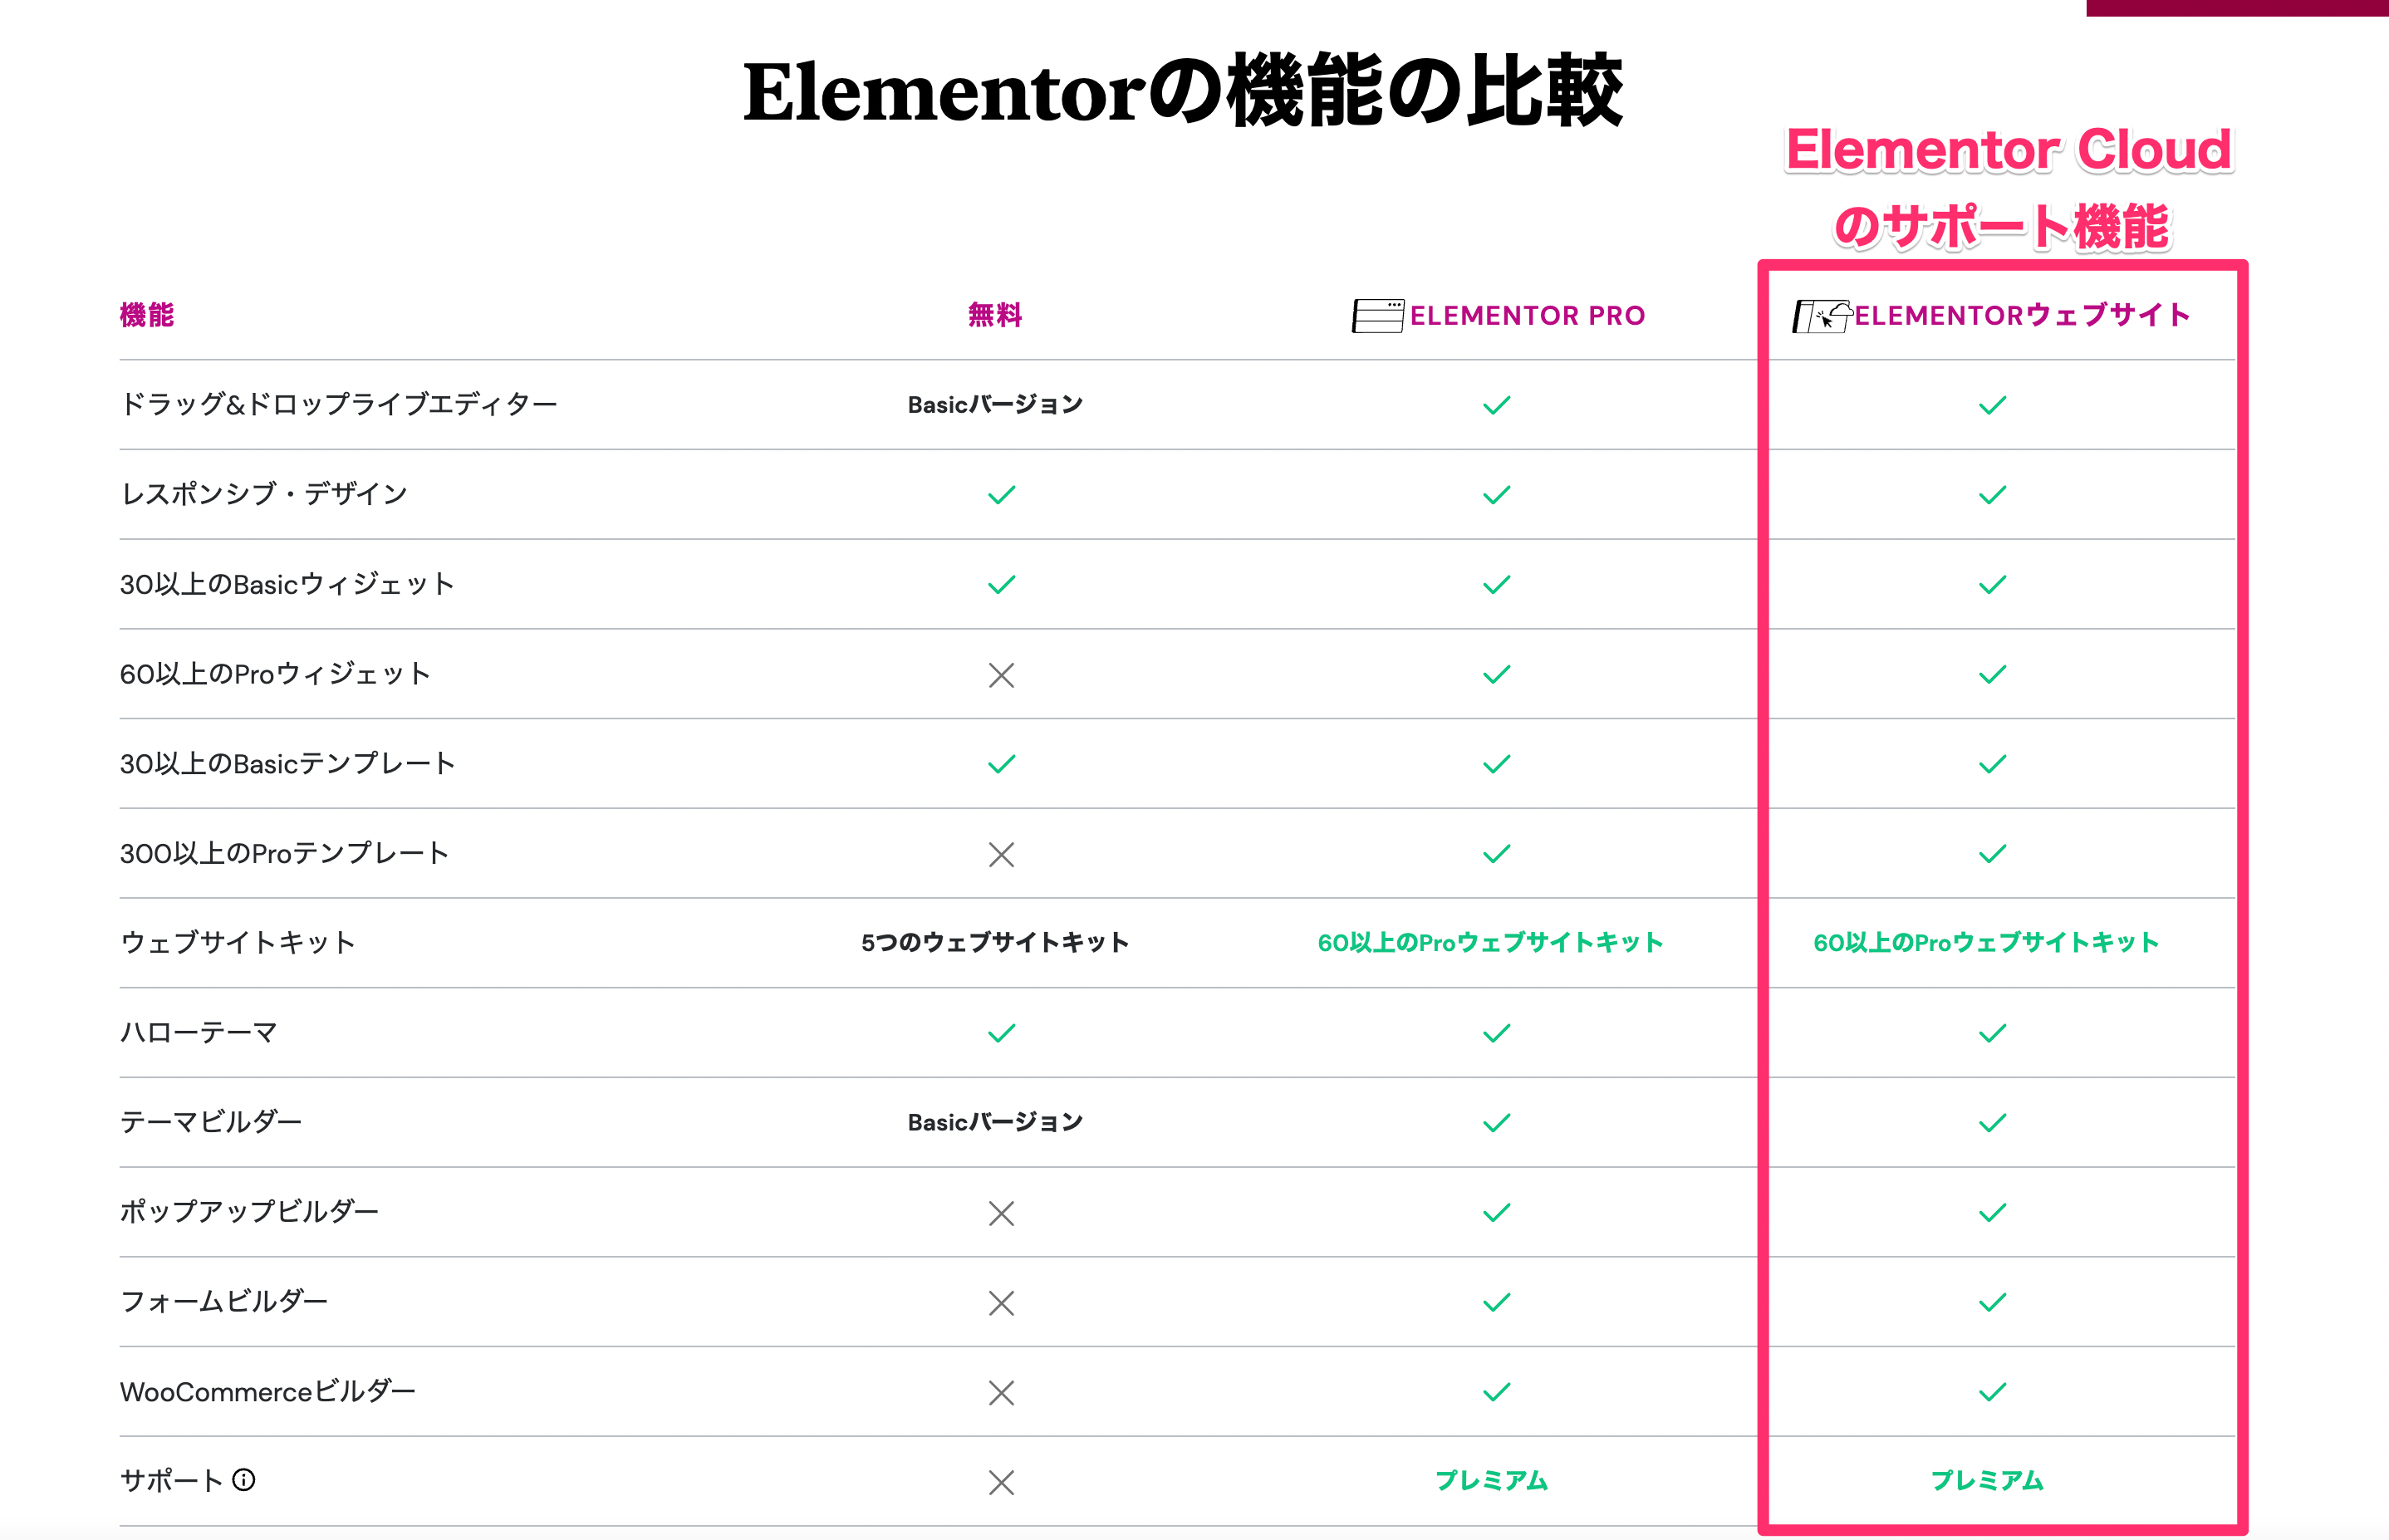 ElementorとElementor Pro、Elementor Cloudの機能比較①